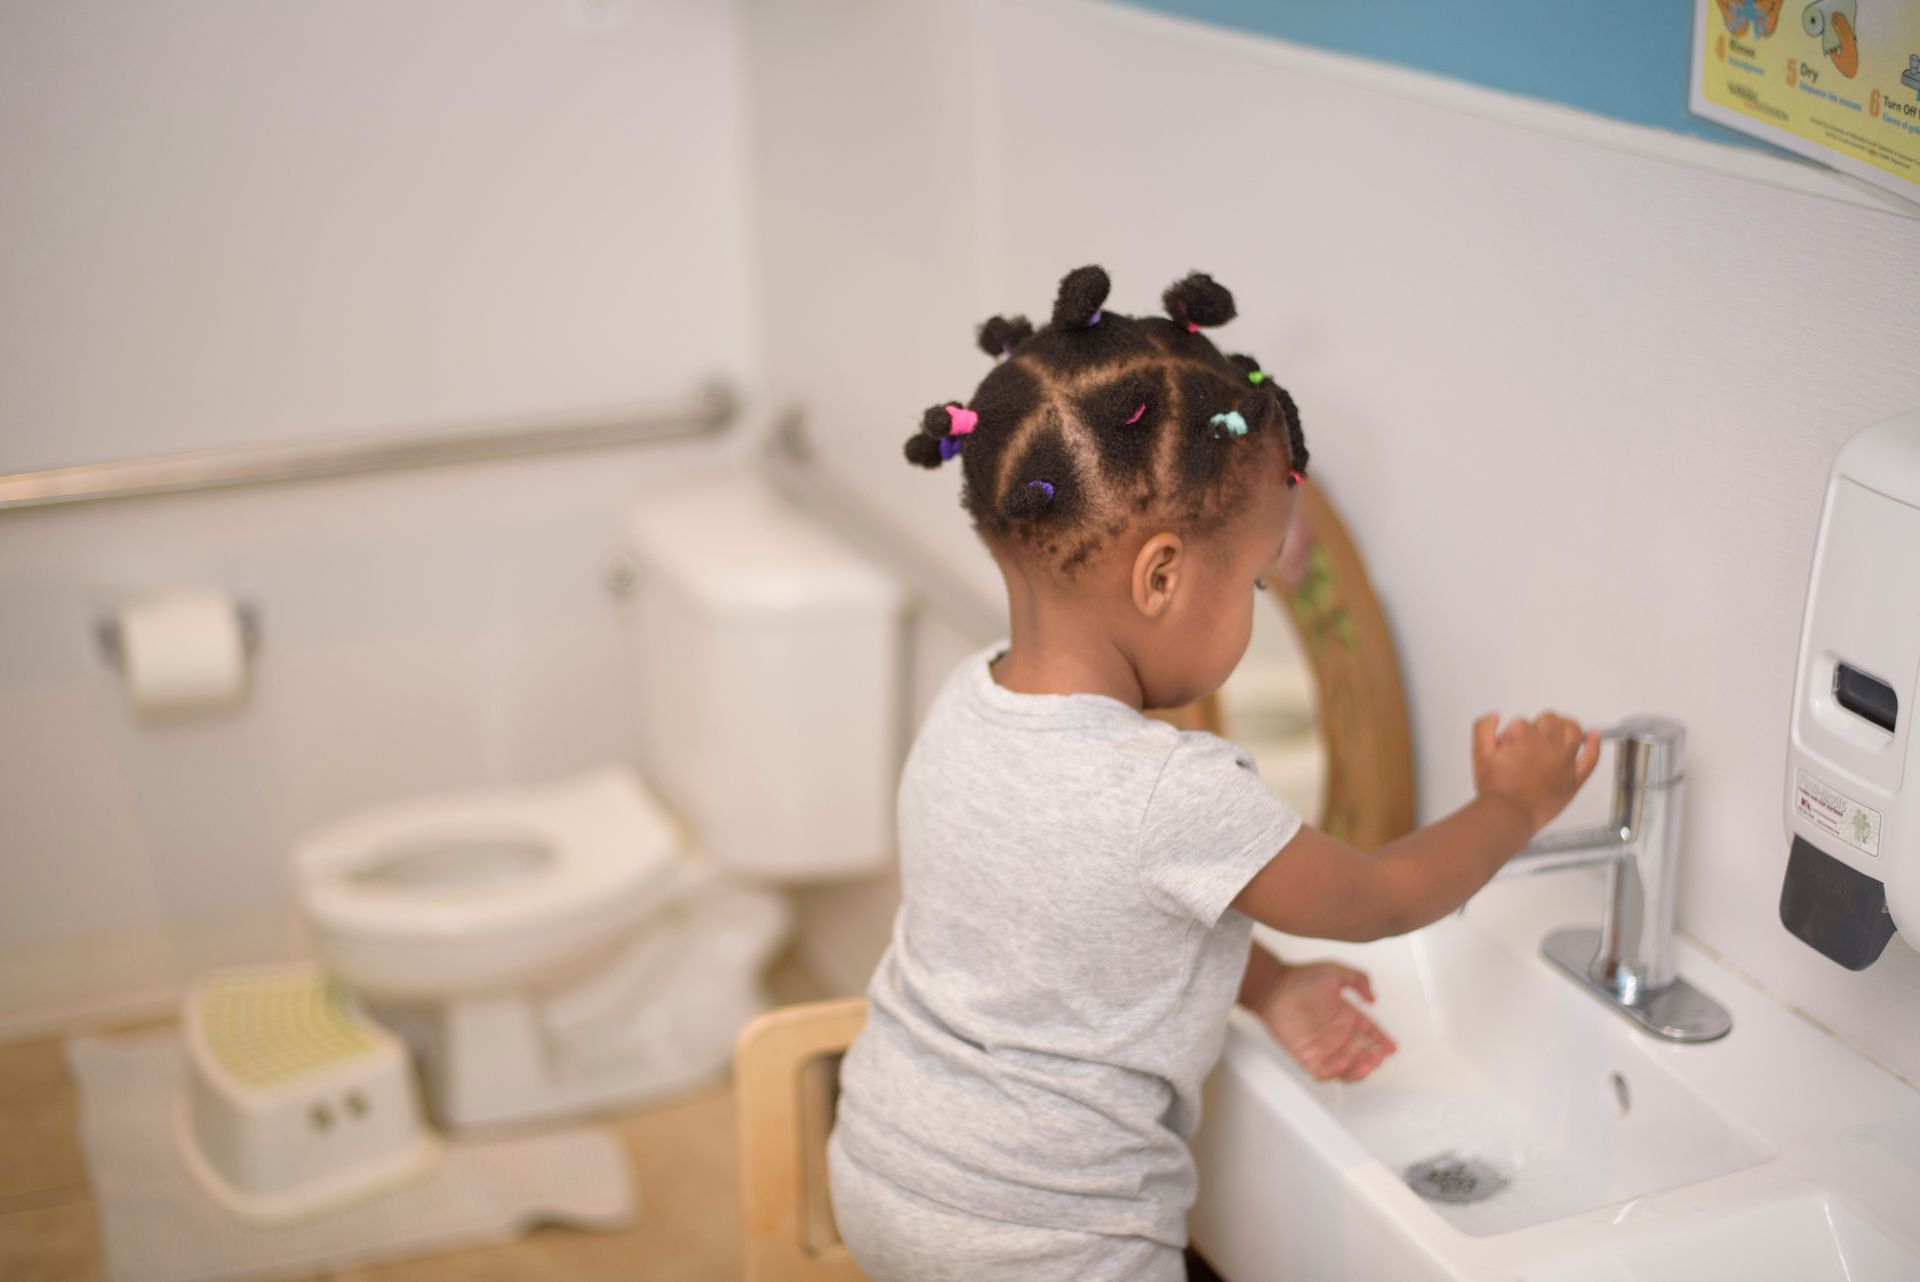 Montessori child learning toilet skills